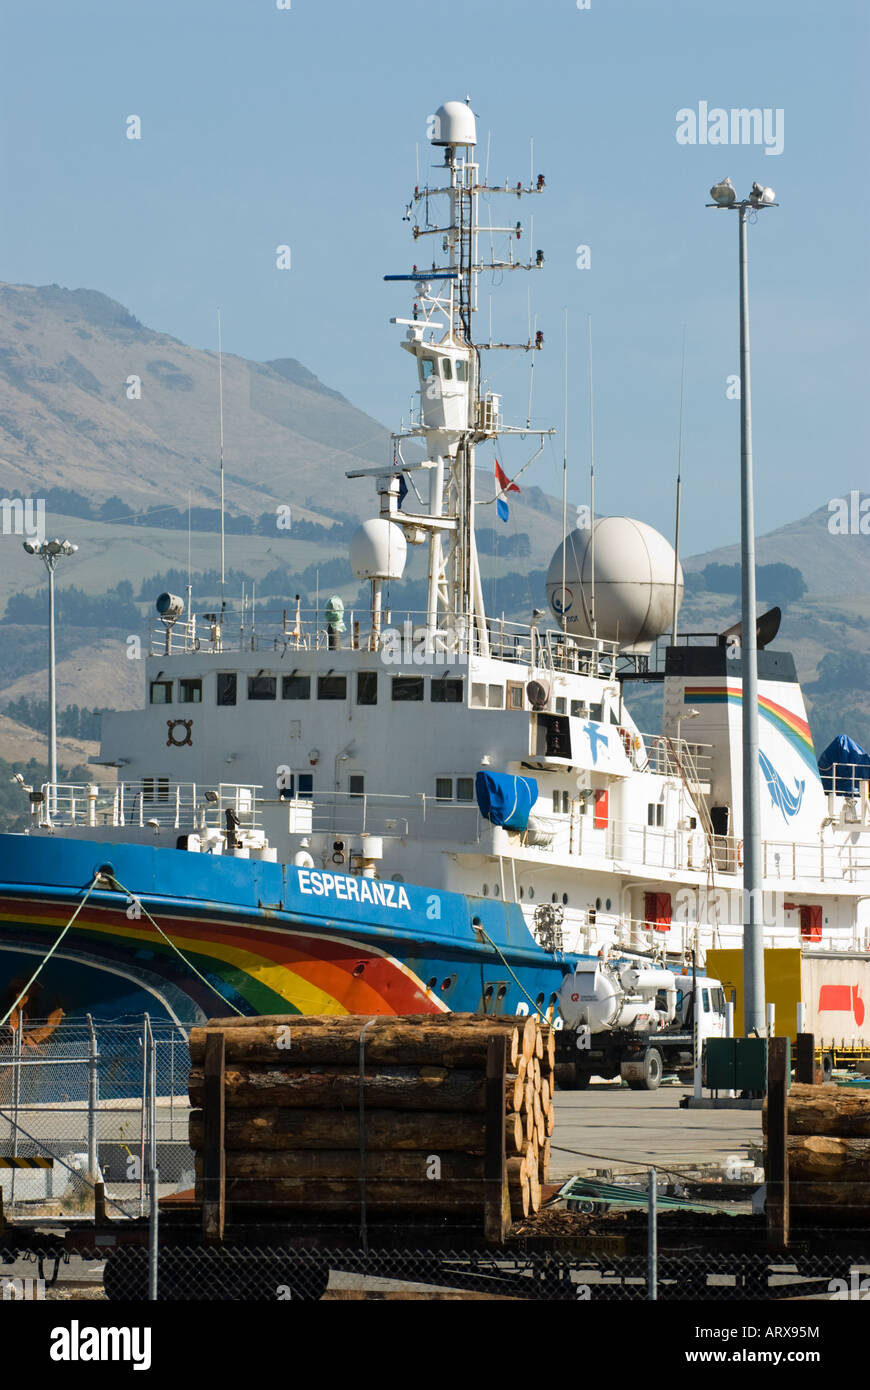 The Greenpeace ship Esperanza moored at the Port of Lyttelton, Christchurch, New Zealand Stock Photo